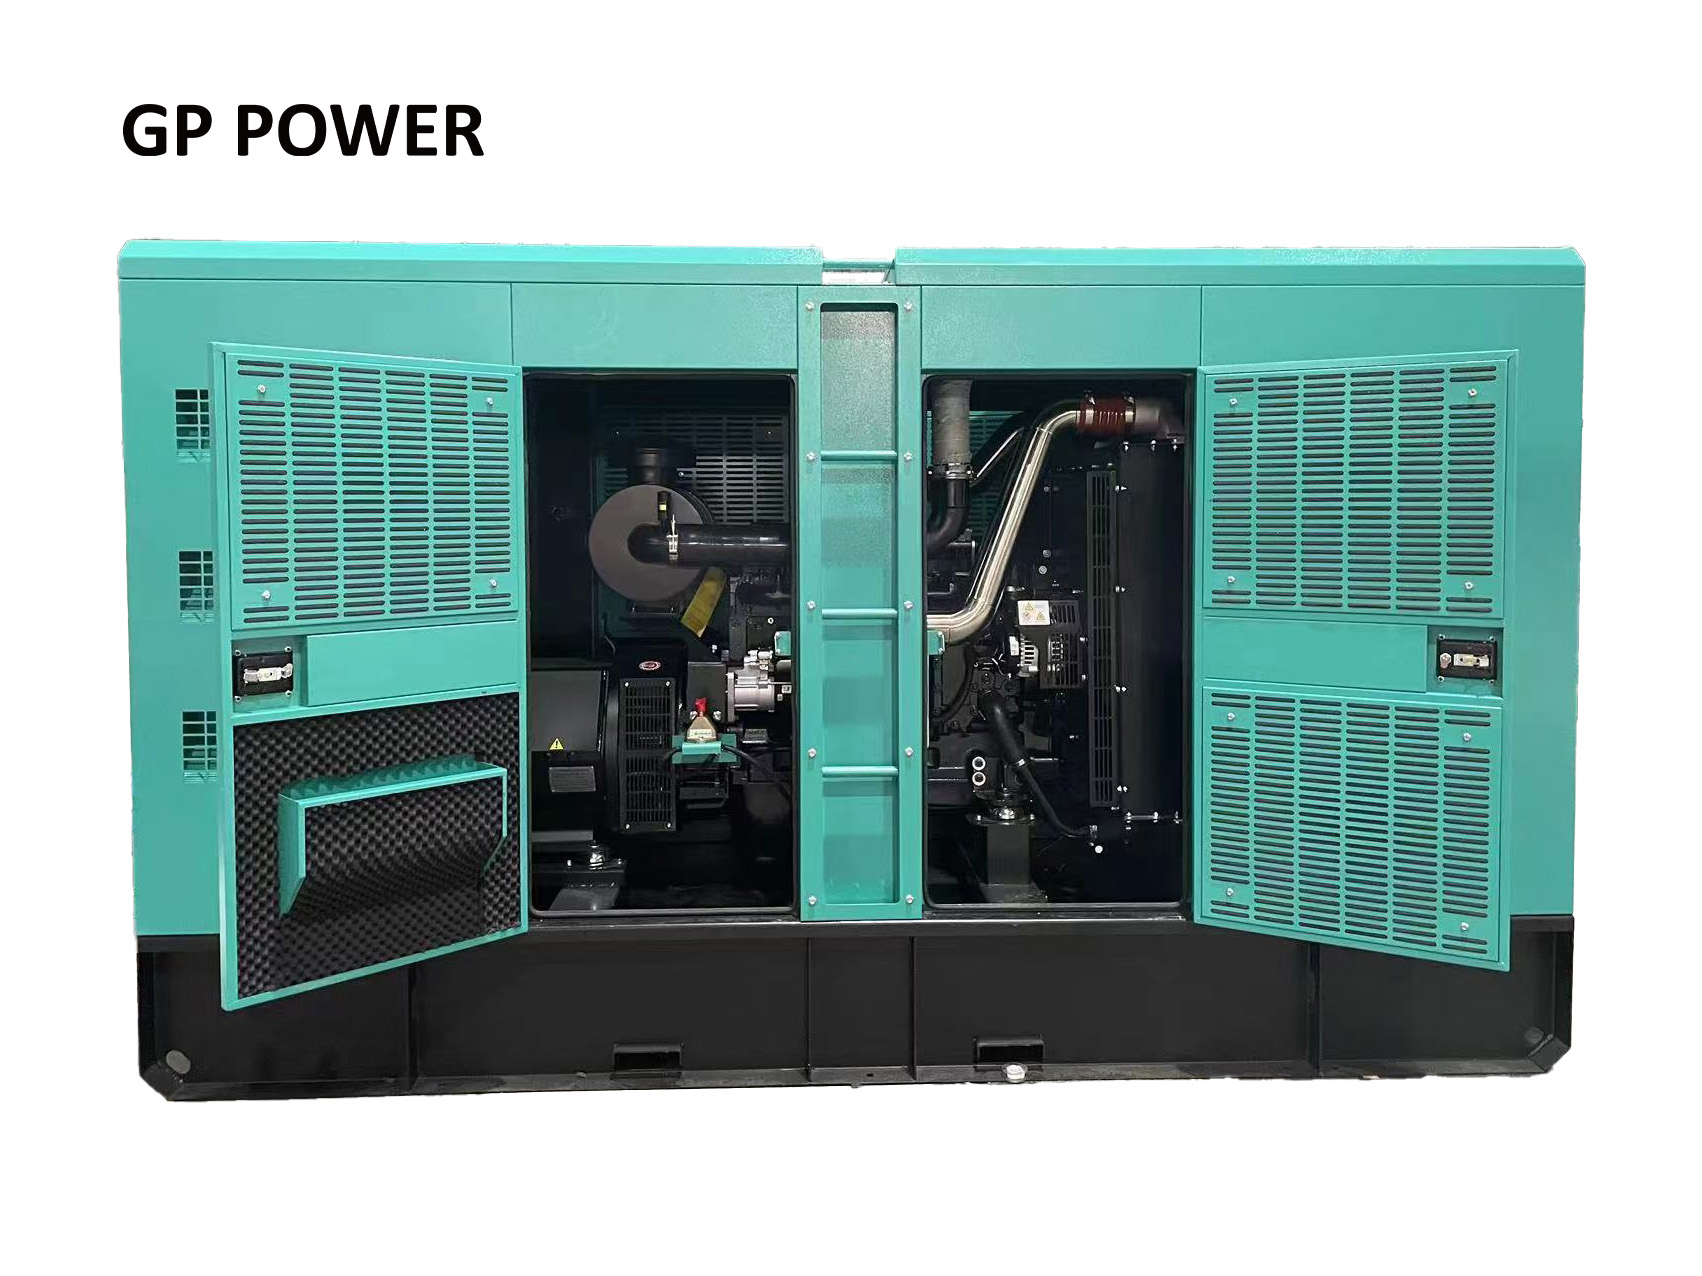 TMU's diesel generators face cold weather testing hurdles